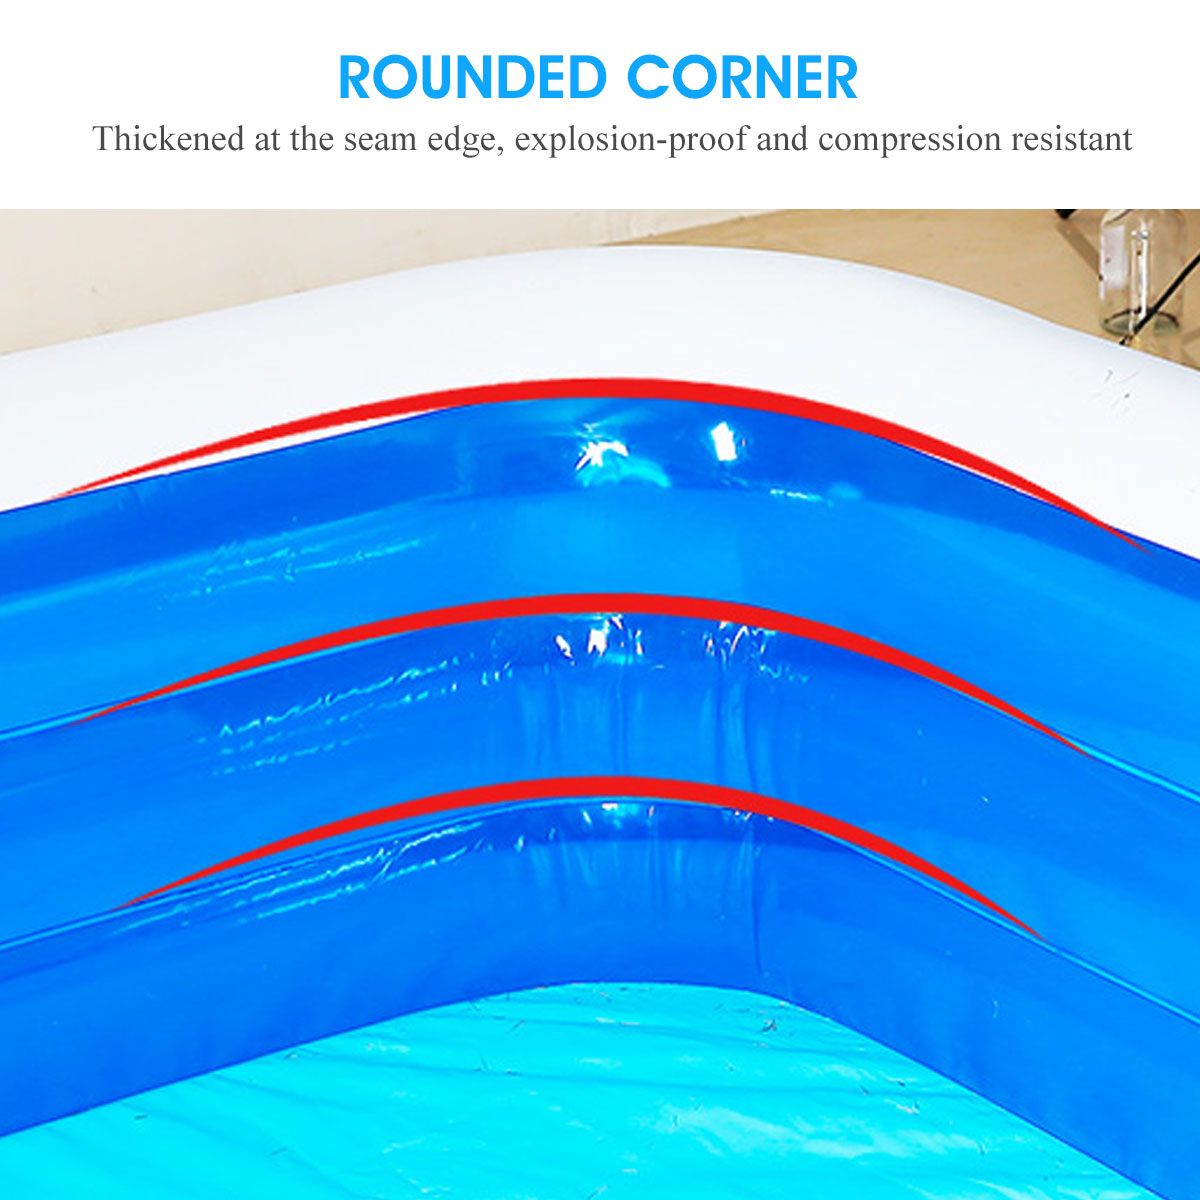 260x160x72cm-4-Layers-Family-Home-Backyard-Kids-Inflatable-Swimming-Pool-Adult-Children-Bathtub-Ball-1718088